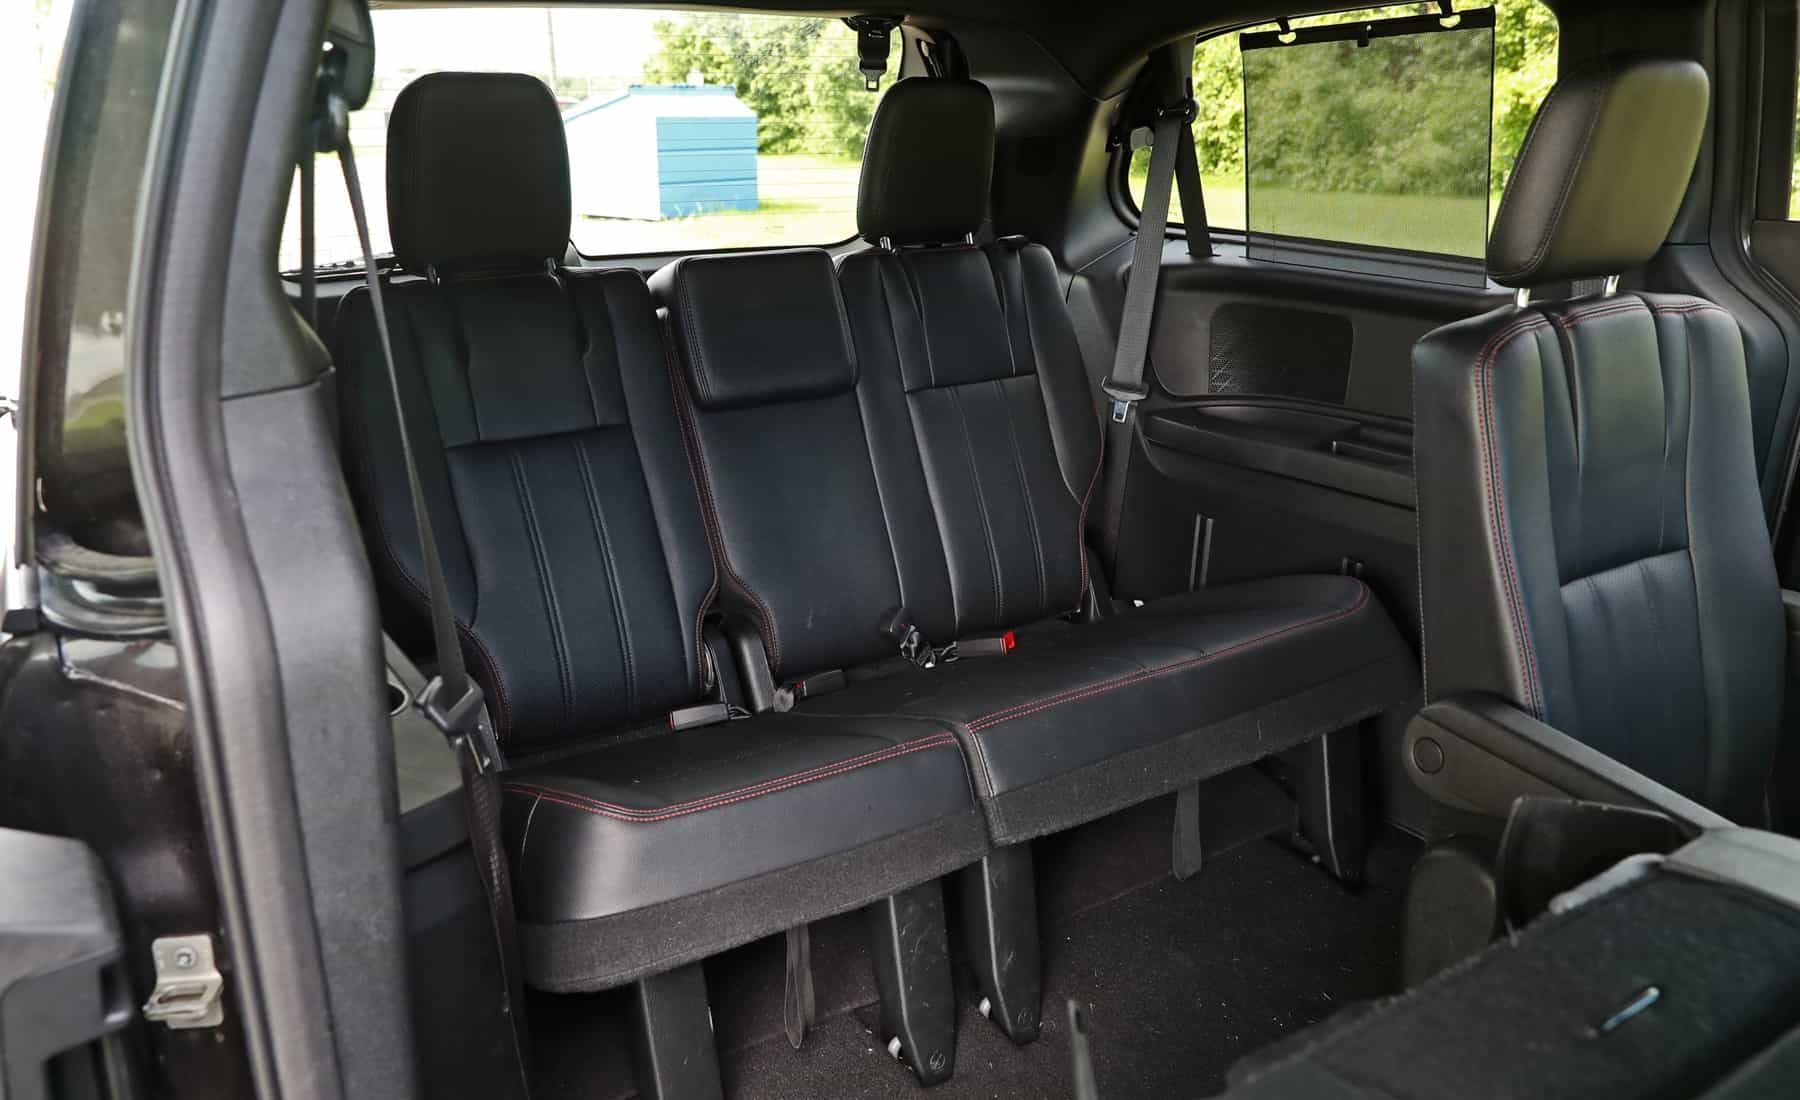 2017 Dodge Grand Caravan Interior Seats Third Row (View 23 of 47)